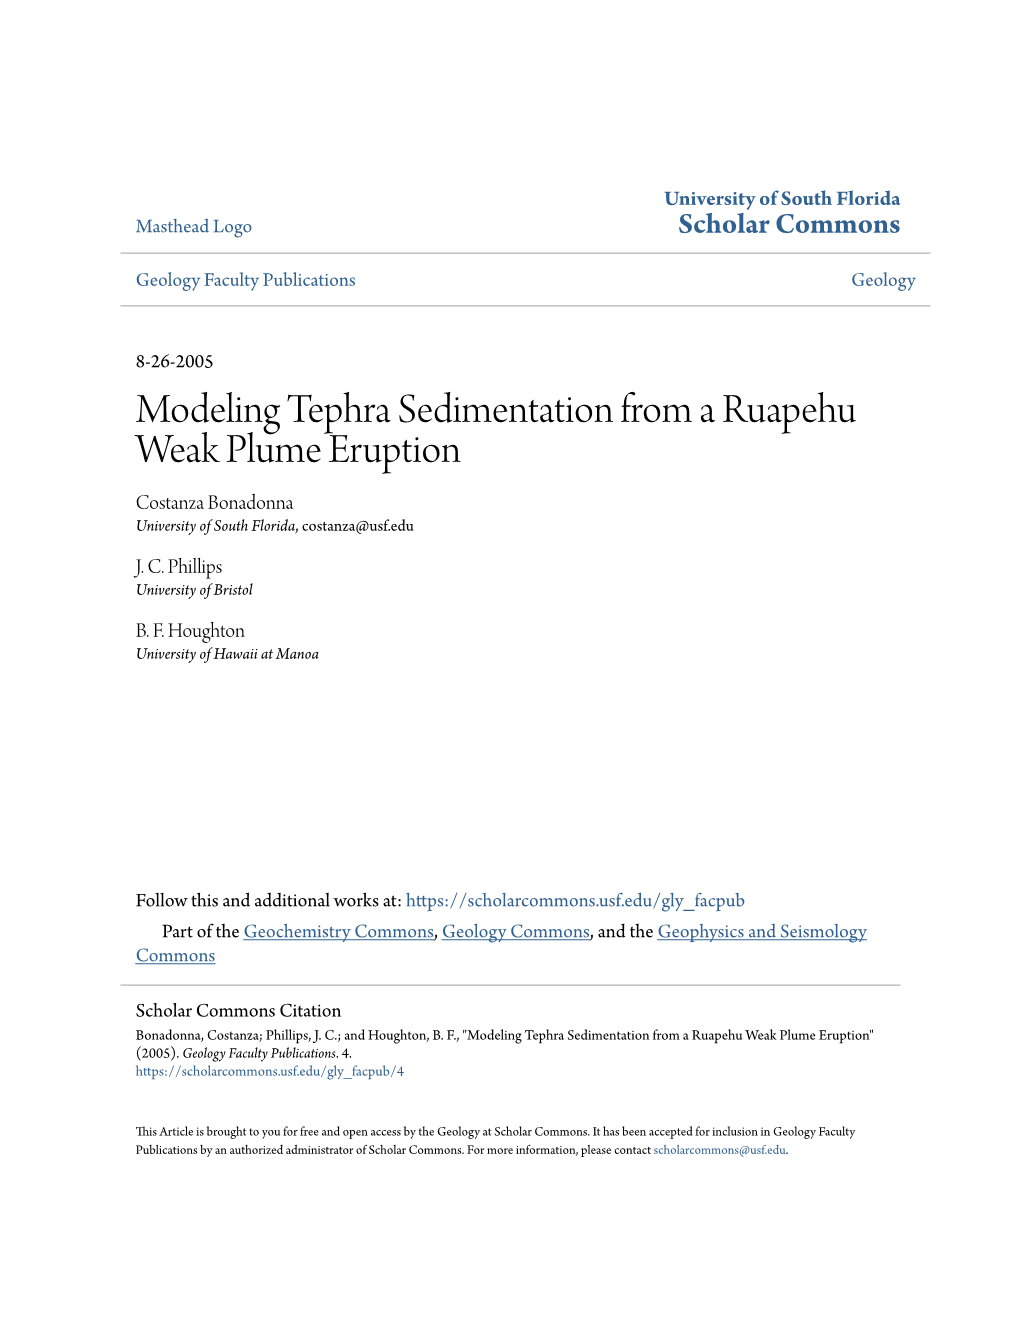 Modeling Tephra Sedimentation from a Ruapehu Weak Plume Eruption Costanza Bonadonna University of South Florida, Costanza@Usf.Edu